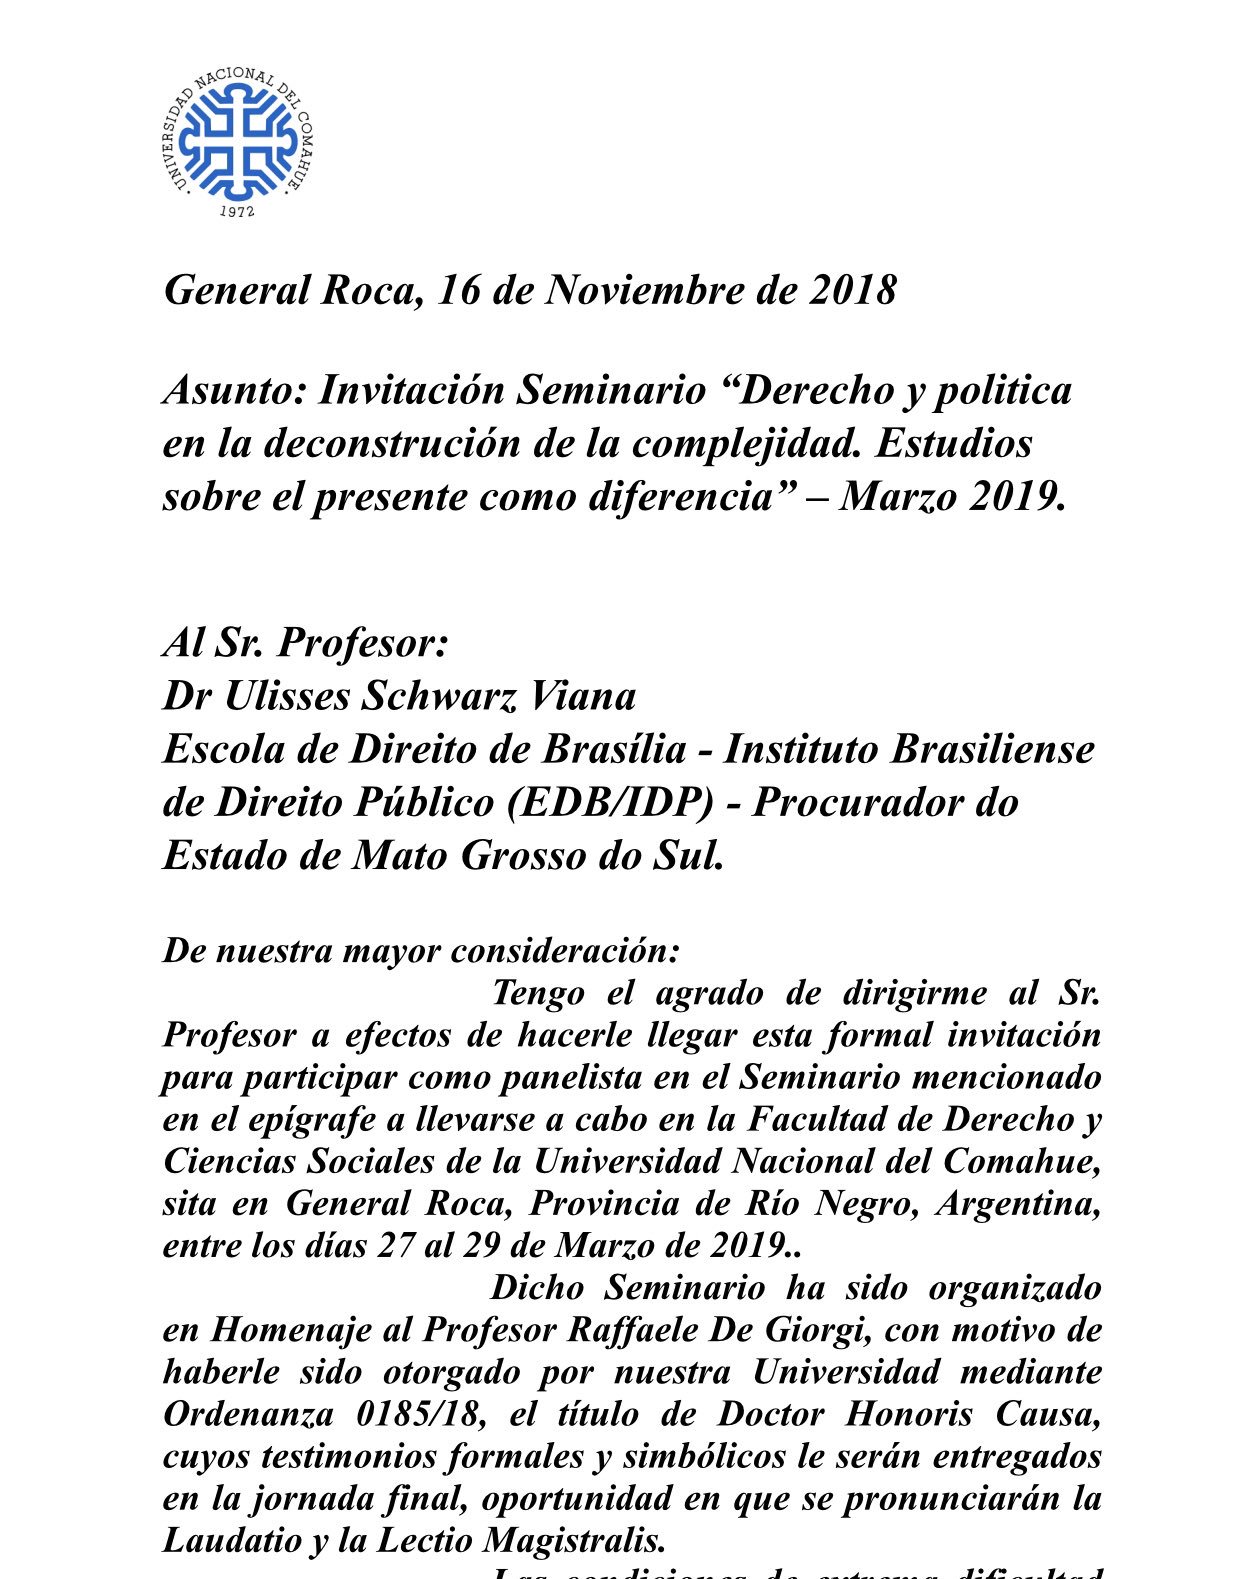 Ulisses Schwarz Viana - Professor - Escola de Direito de Brasília (EDB/IDP)